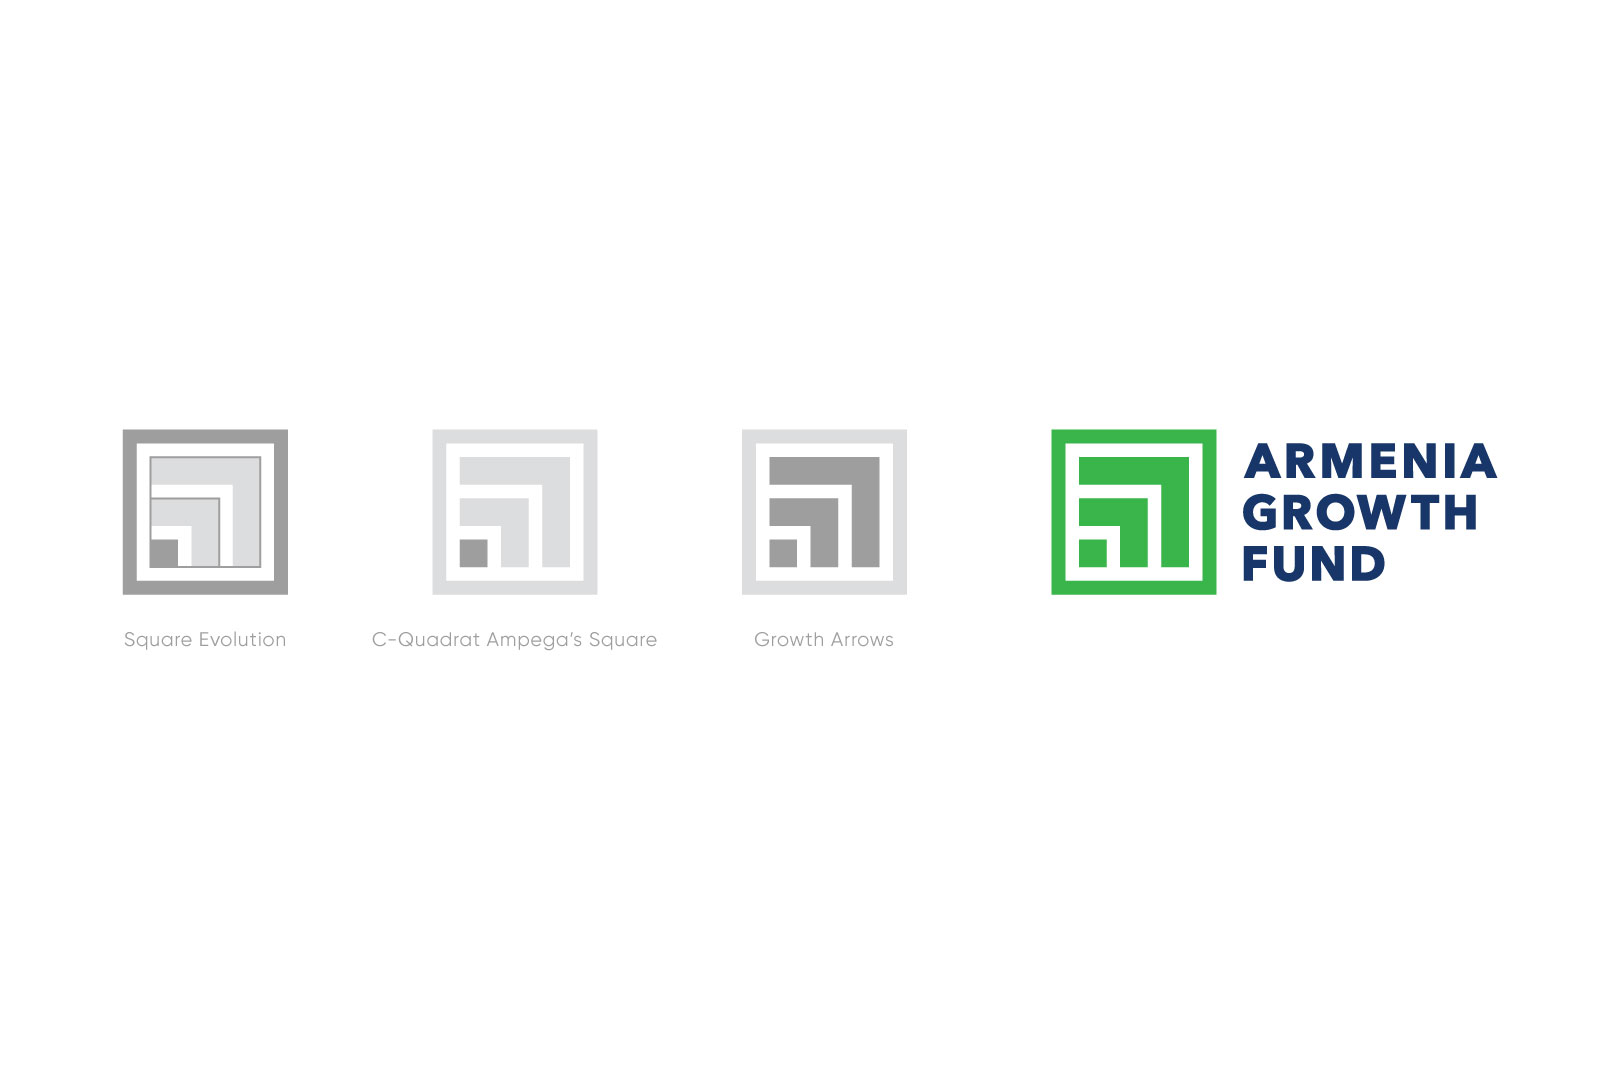 Armenia Growth Fund (AGF) branding and logo design by Indigo branding